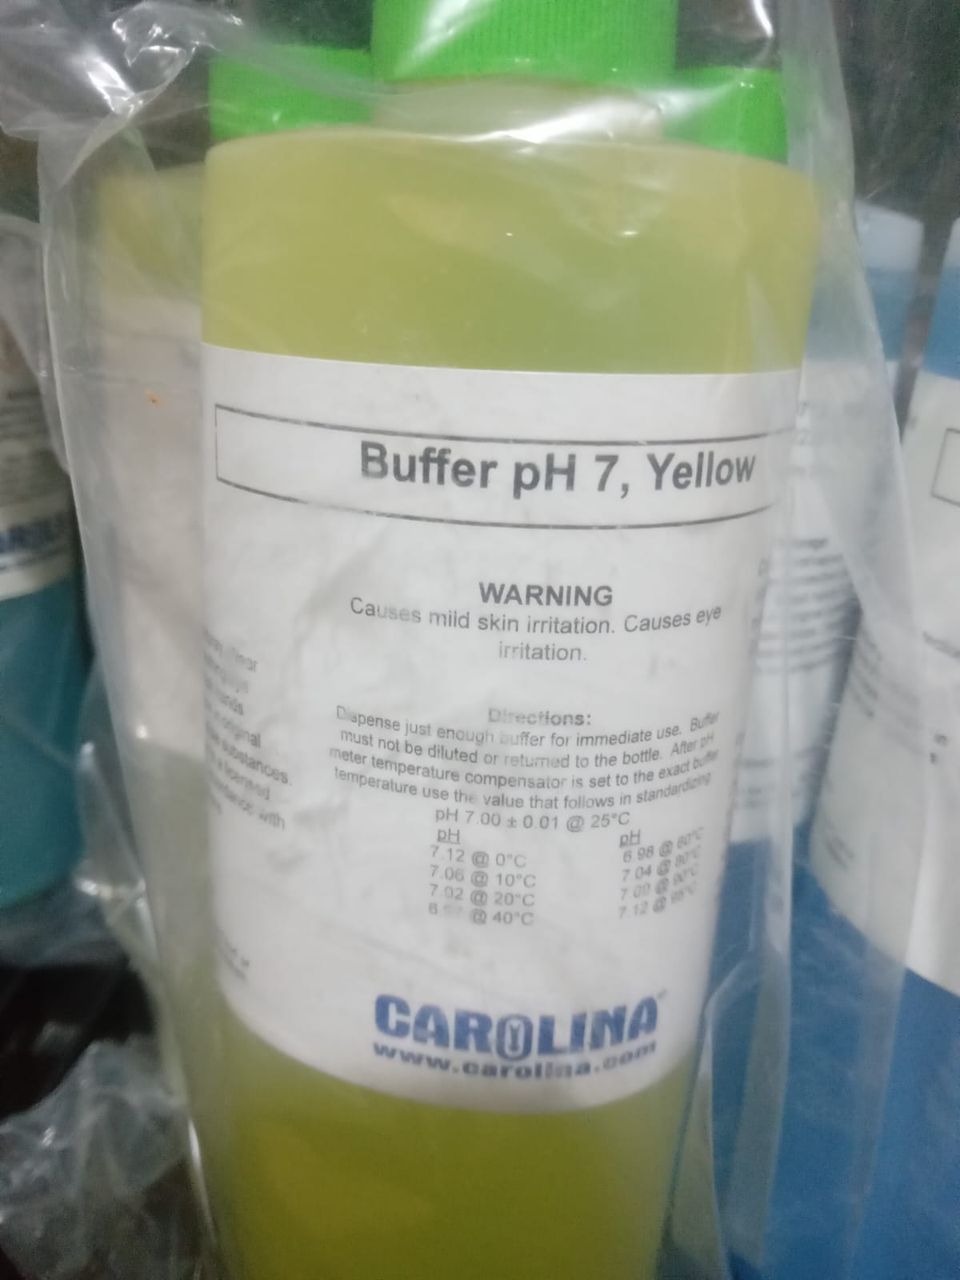 Buffer ph 7 yellow